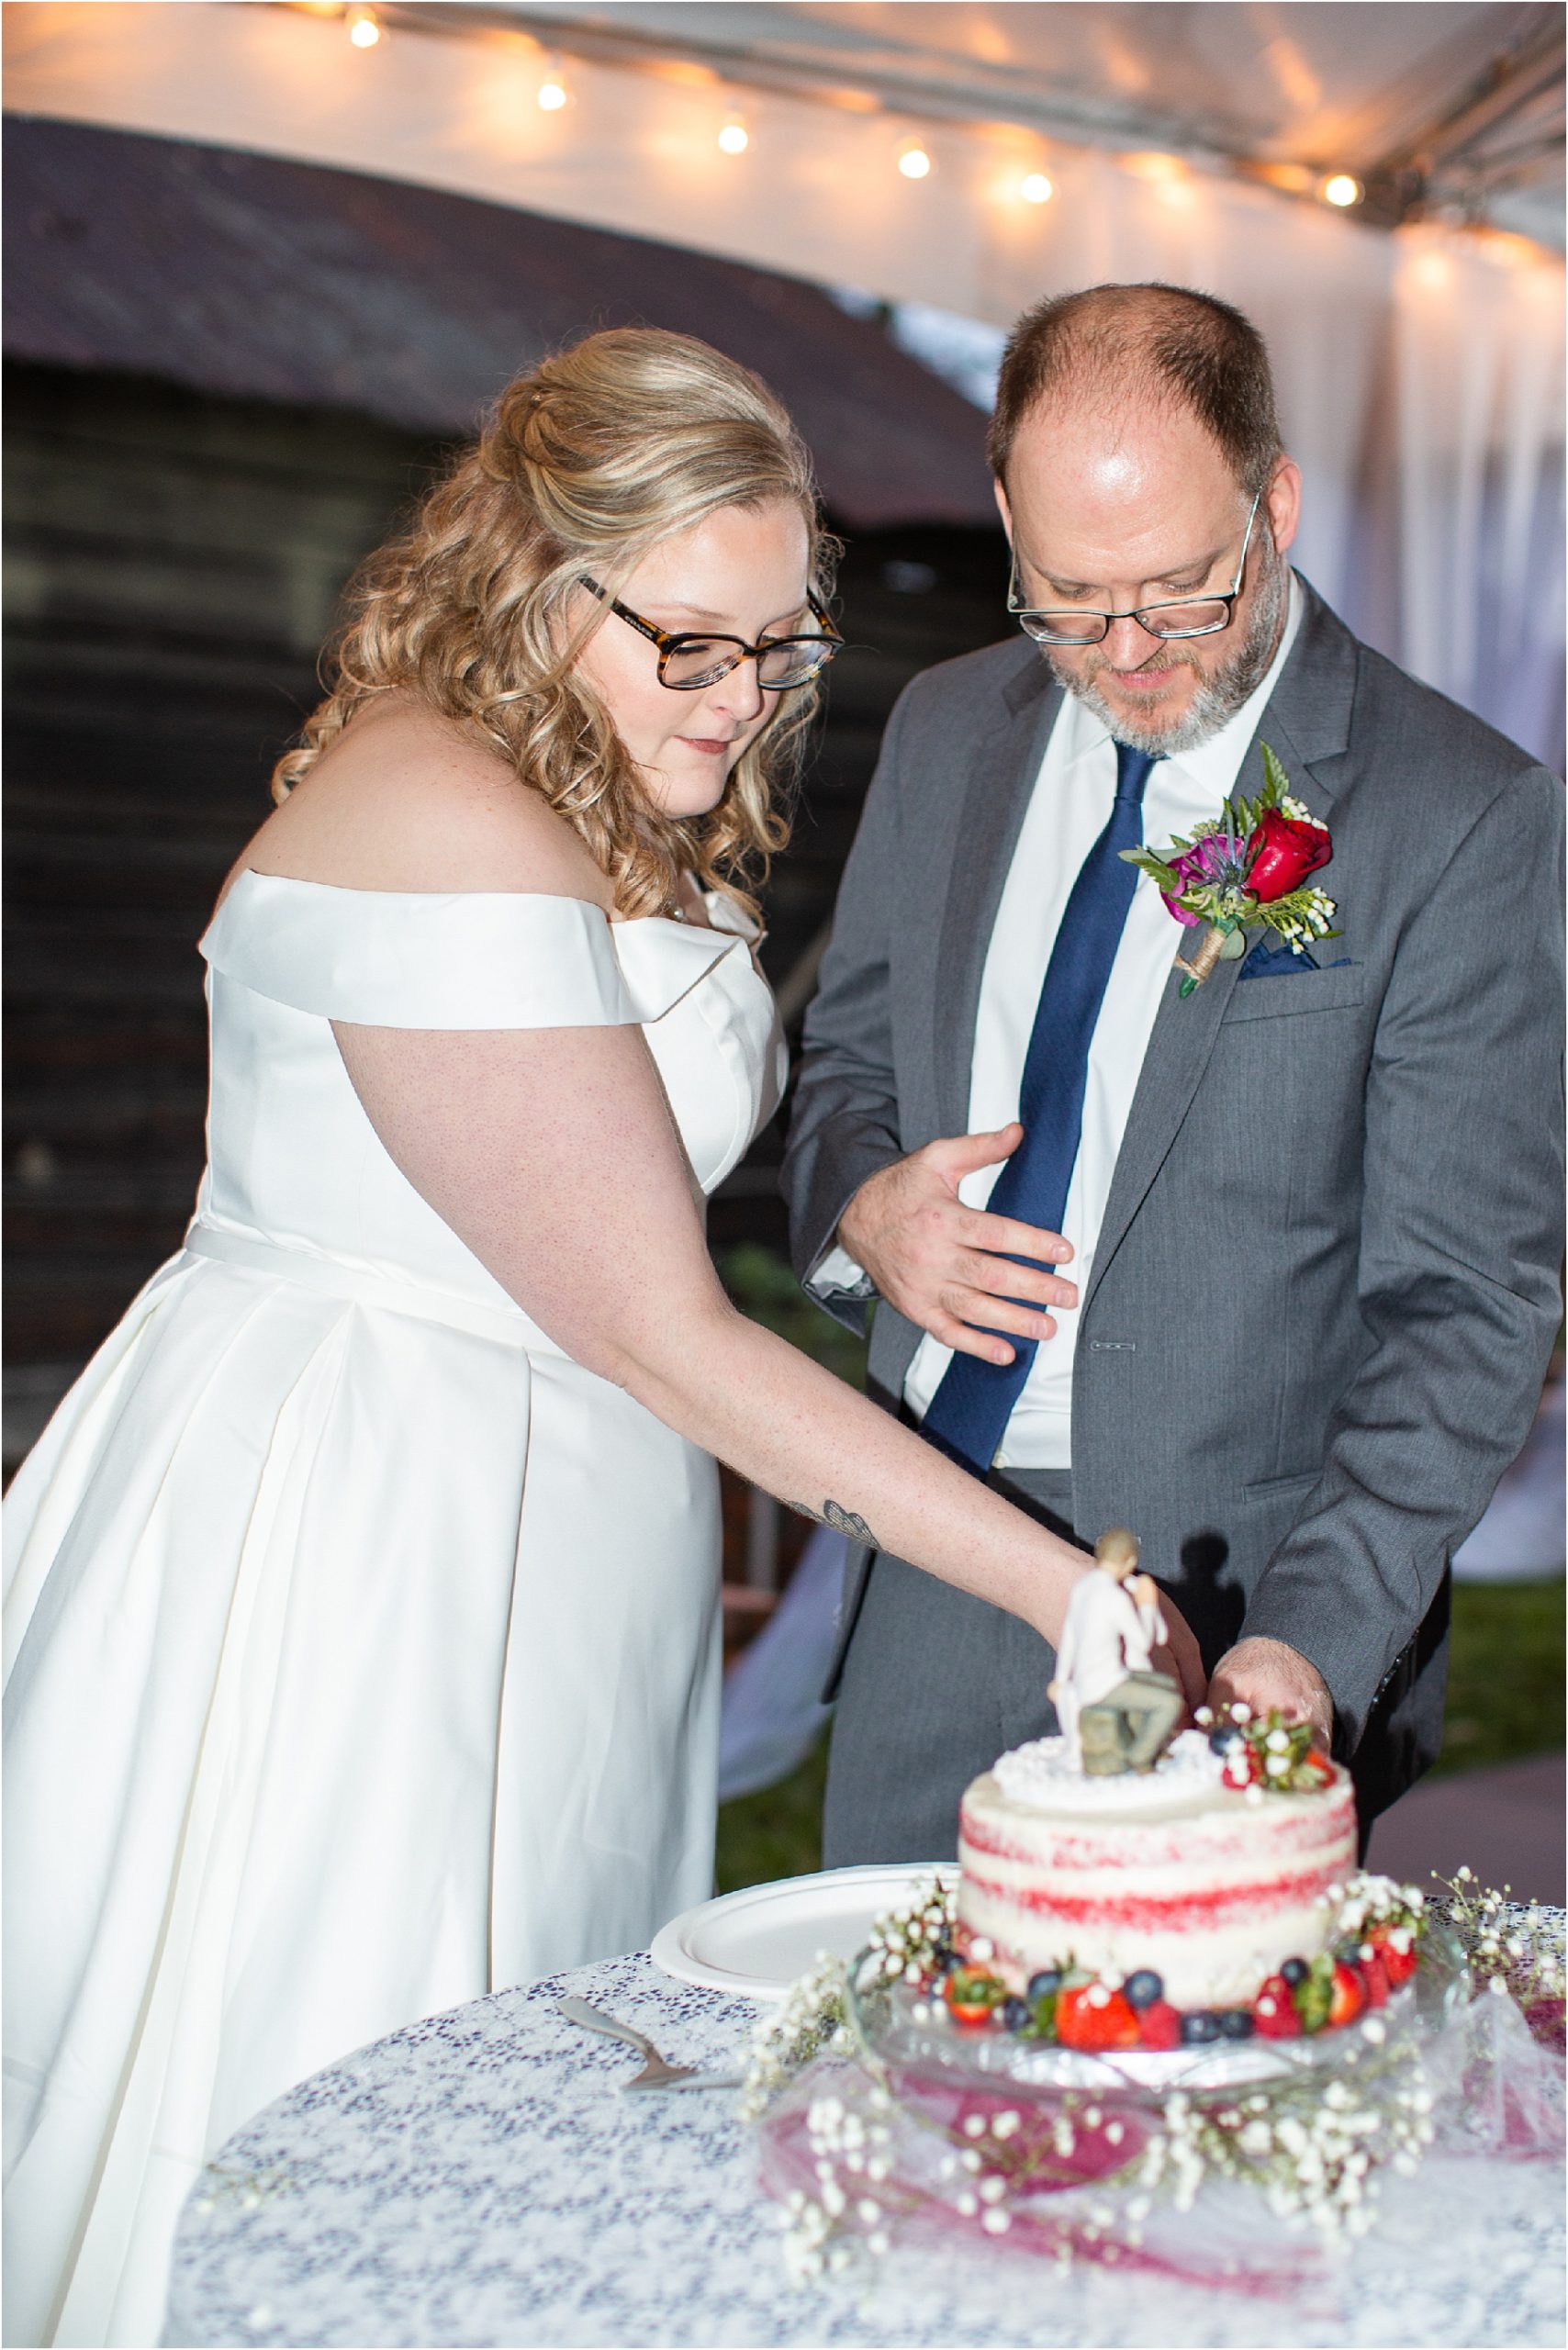 newlweds cut small wedding cake